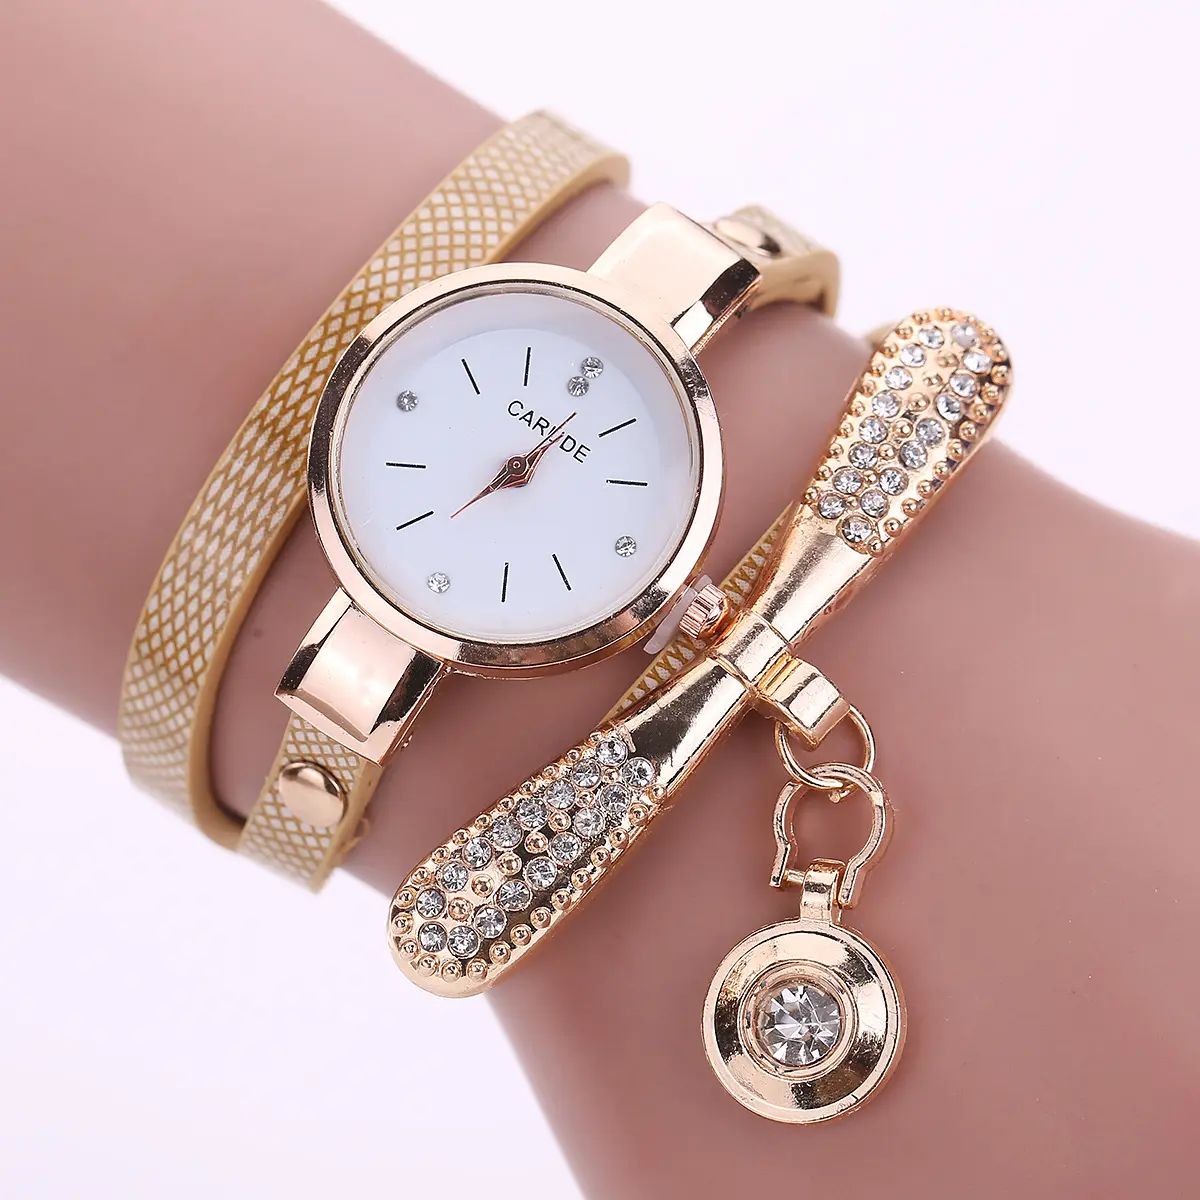 Luxury Leather Cute Charm Quartz Watch Women Ladies Casual Crystal Fashion Bracelet Wrist Watch relogio feminino female